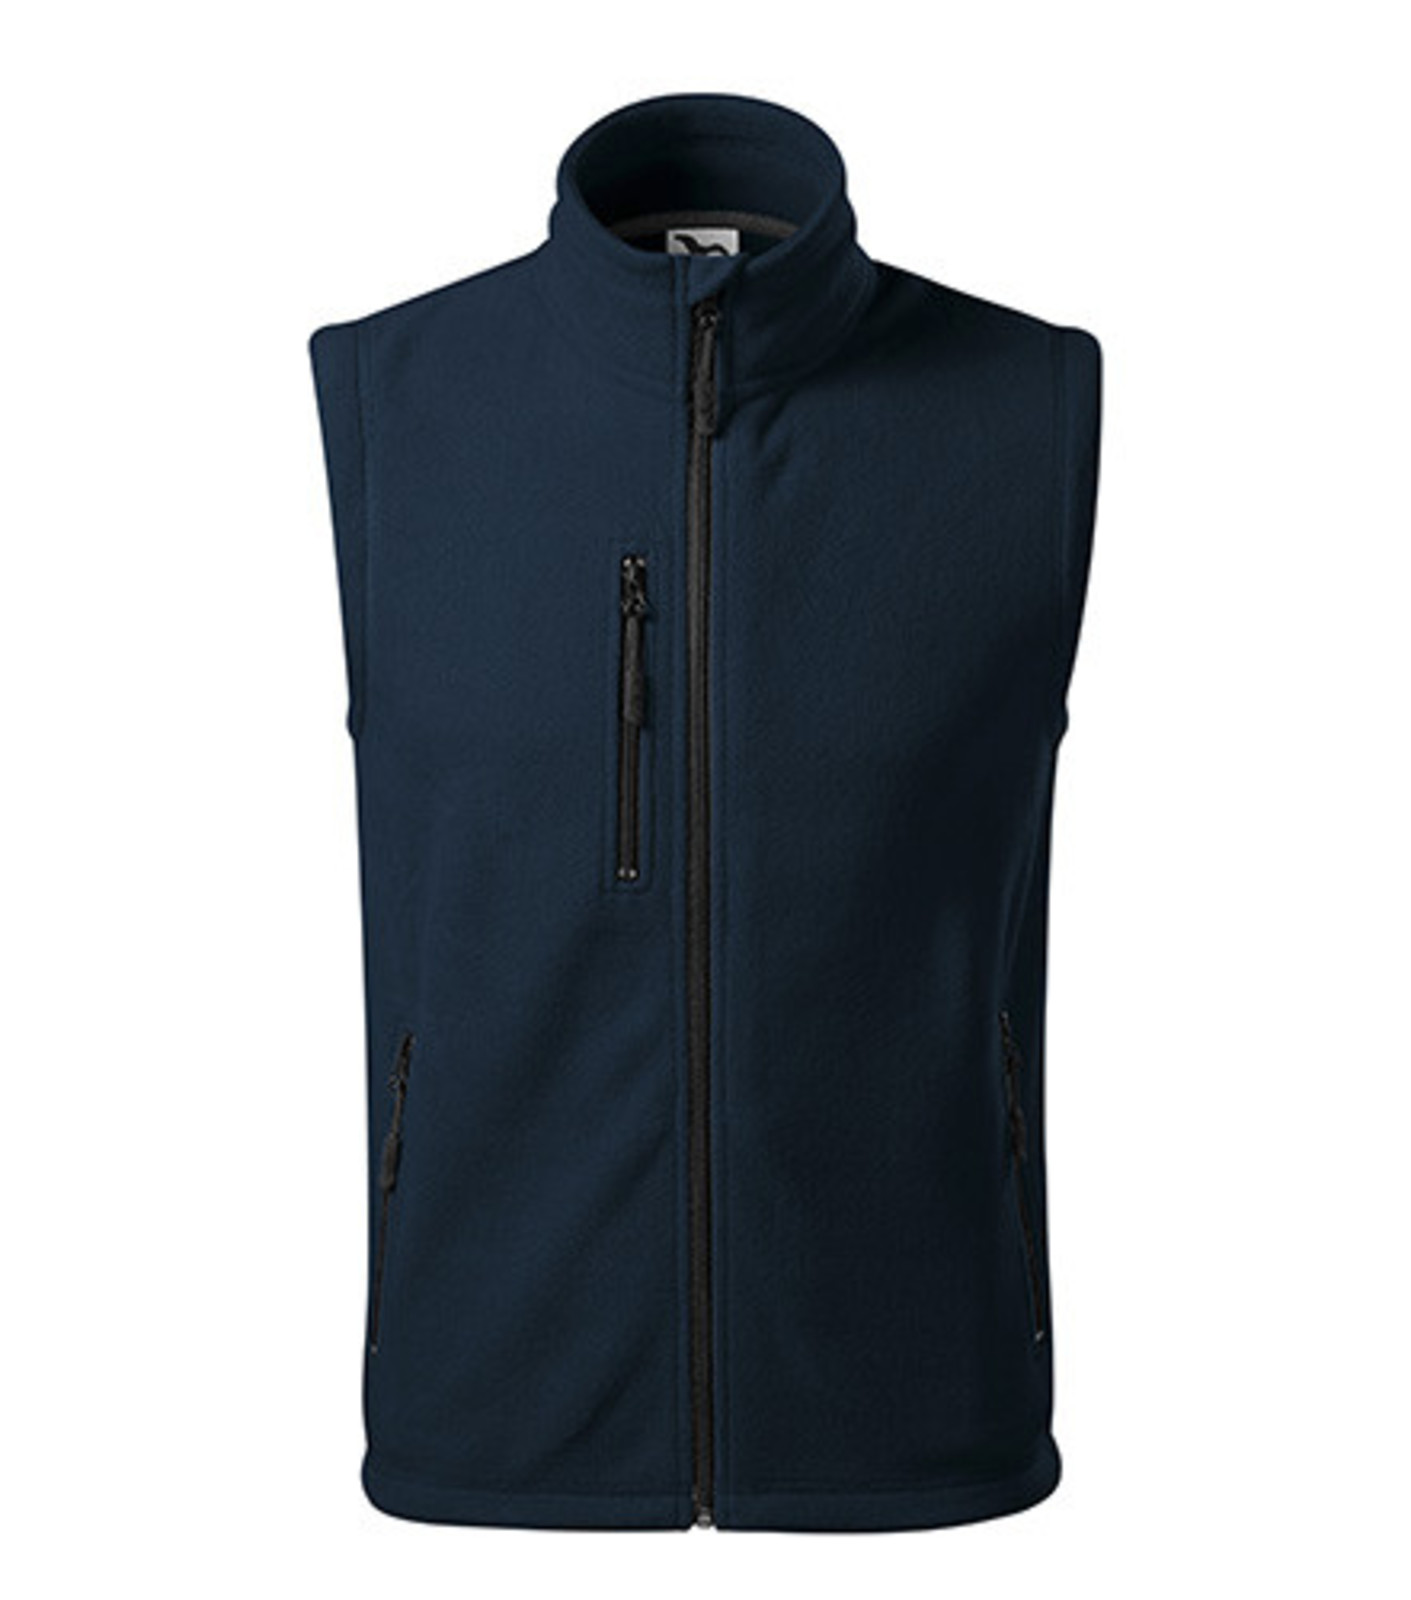 Unisex fleecová vesta Malfini Exit 525 - veľkosť: XXL, farba: tmavo modrá